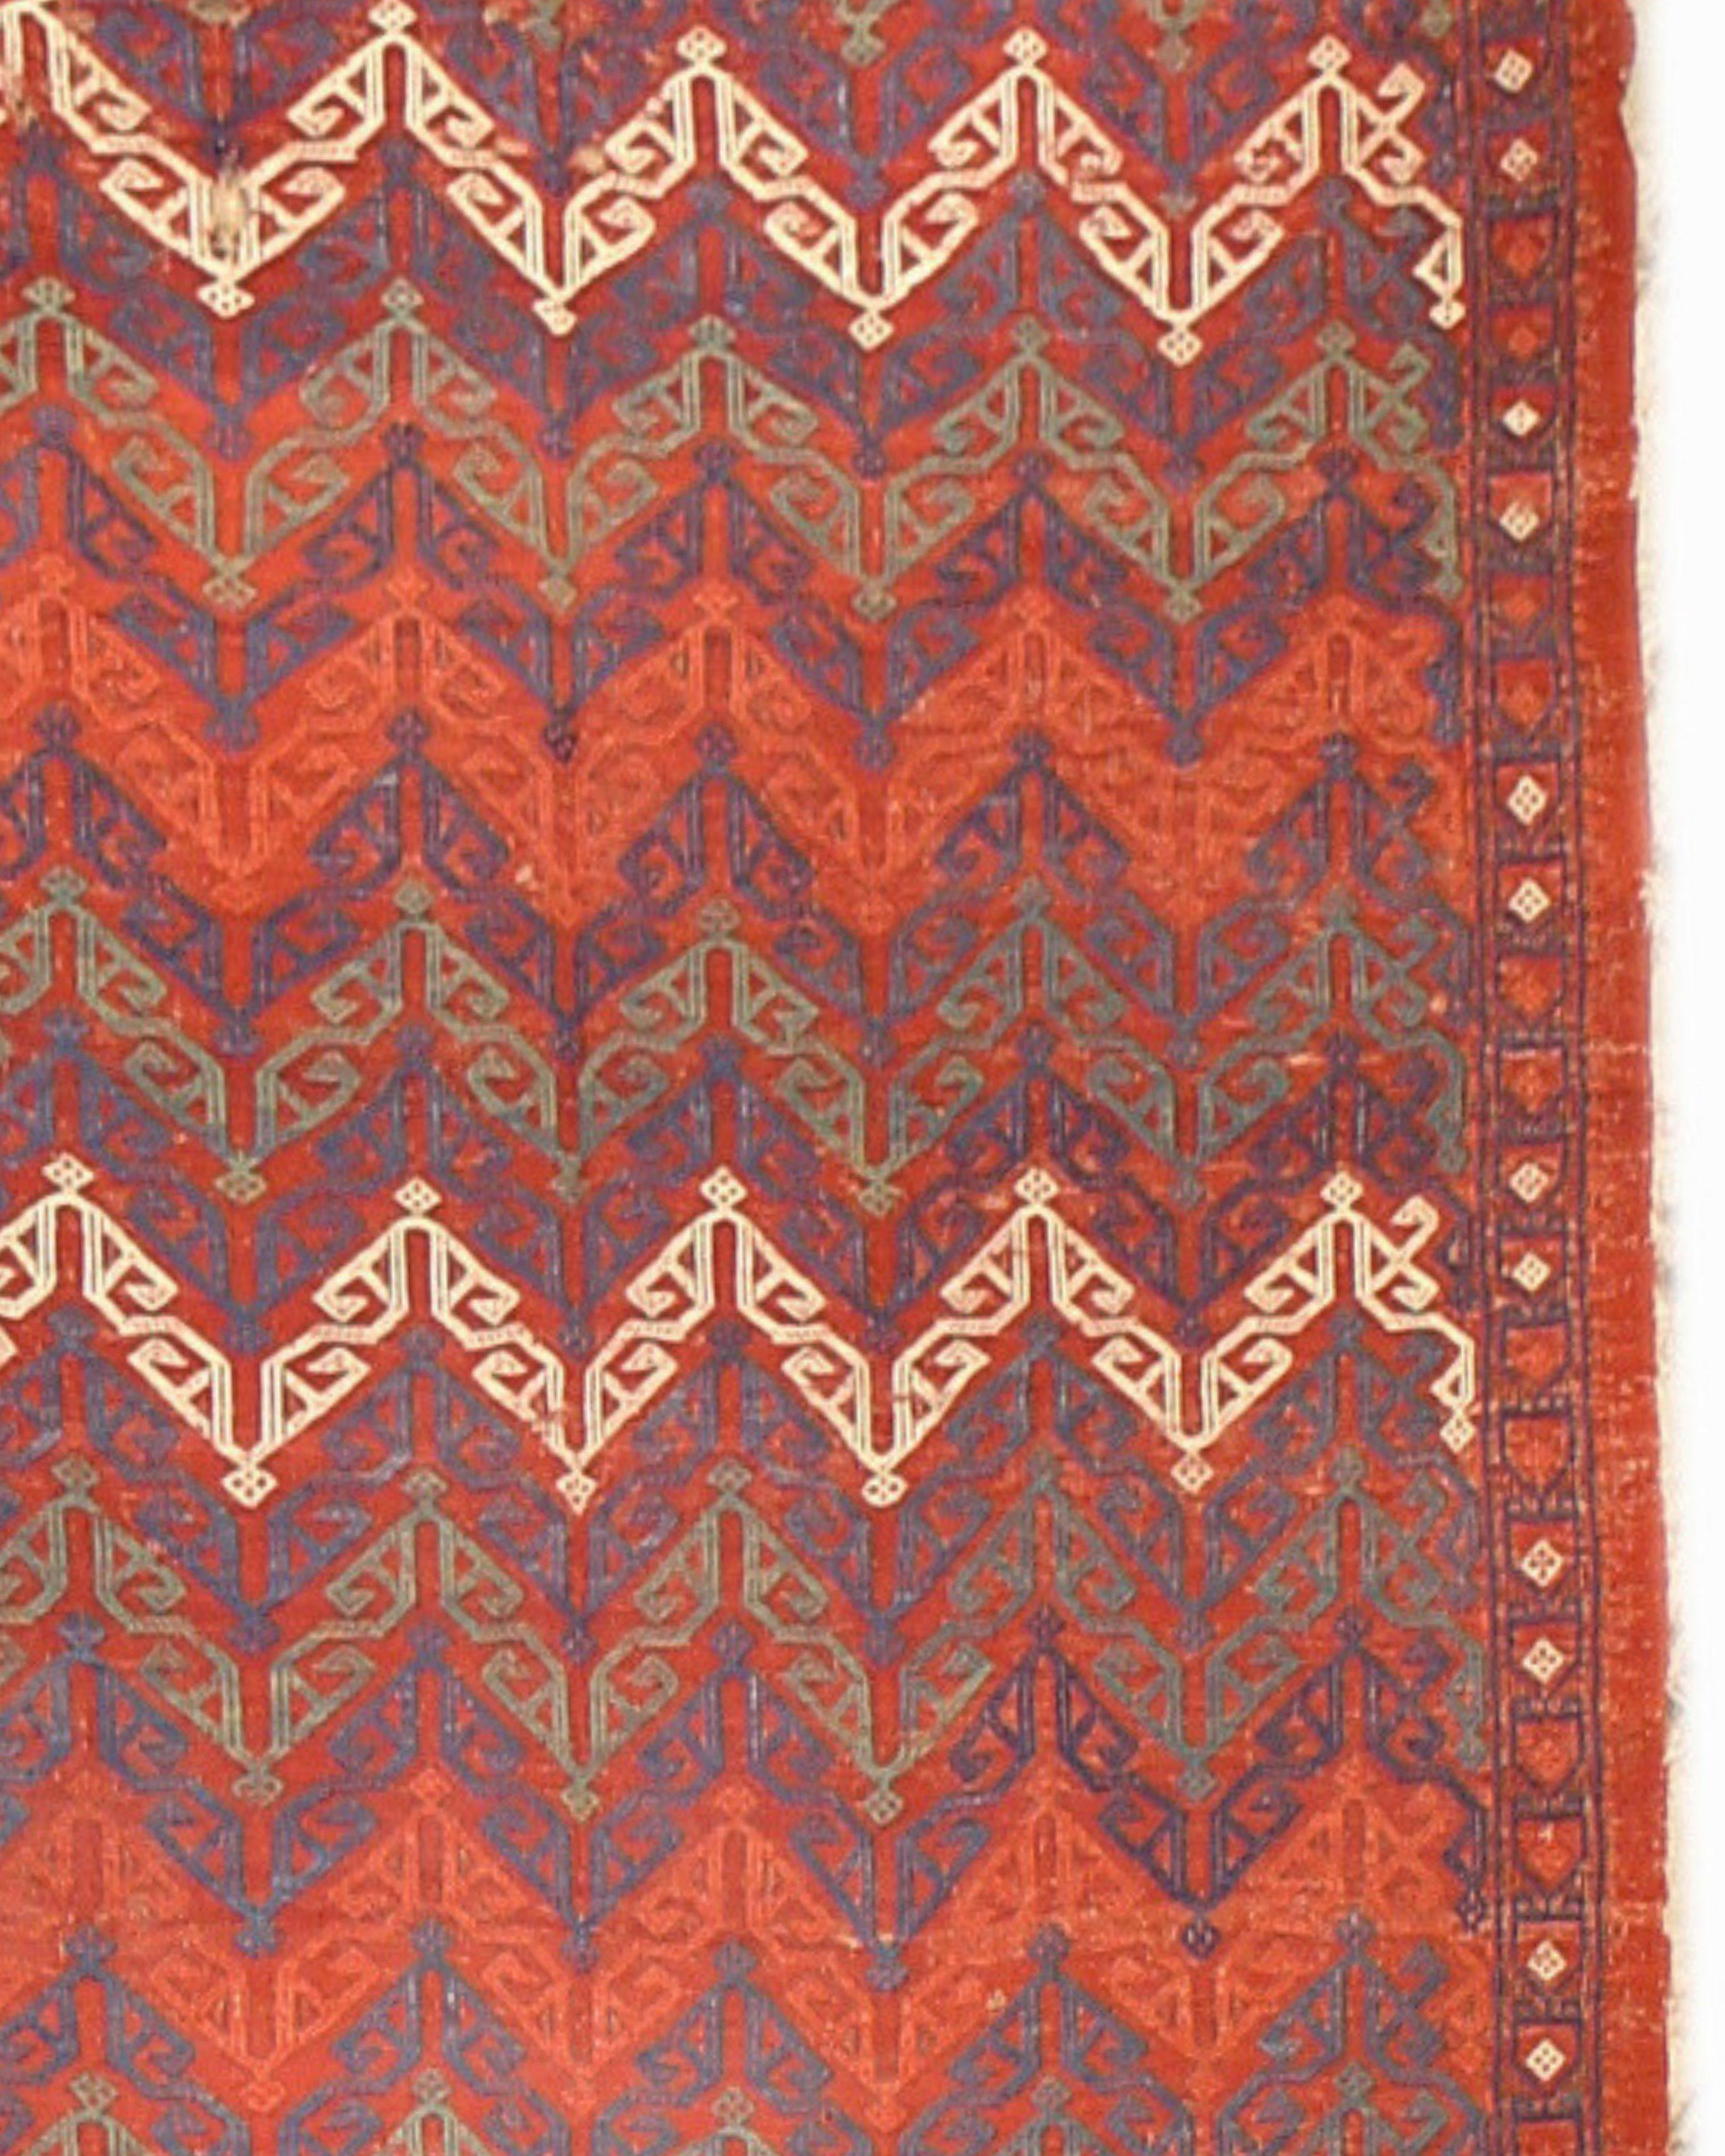 Ancien tapis turc Bergama Jajim, 19e siècle

Informations supplémentaires :
Dimensions : 4'7